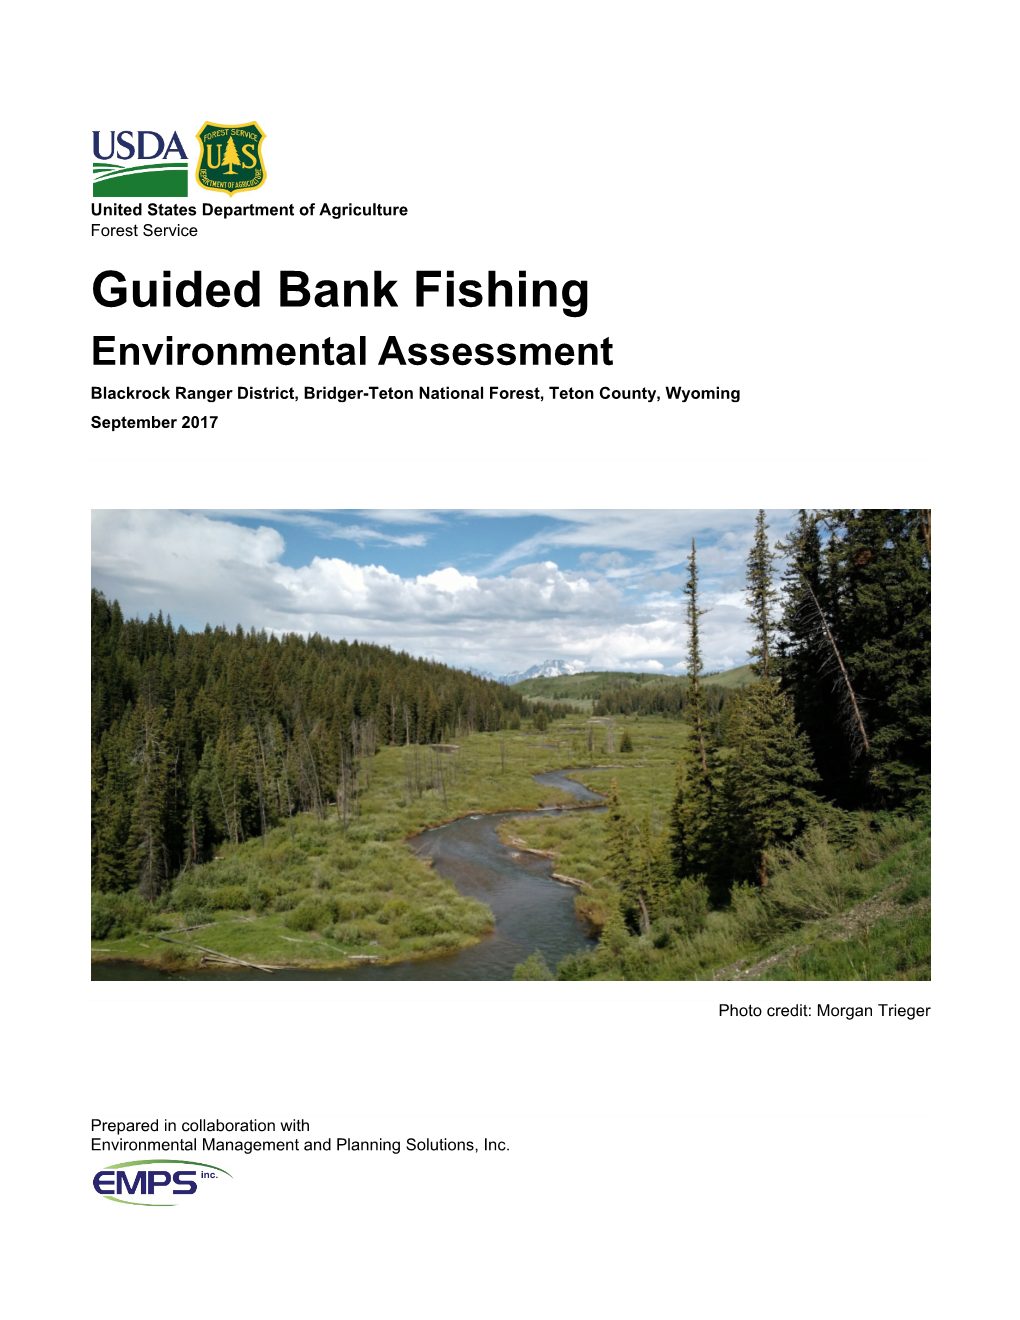 Guided Bank Fishing Environmental Assessment Blackrock Ranger District, Bridger-Teton National Forest, Teton County, Wyoming September 2017